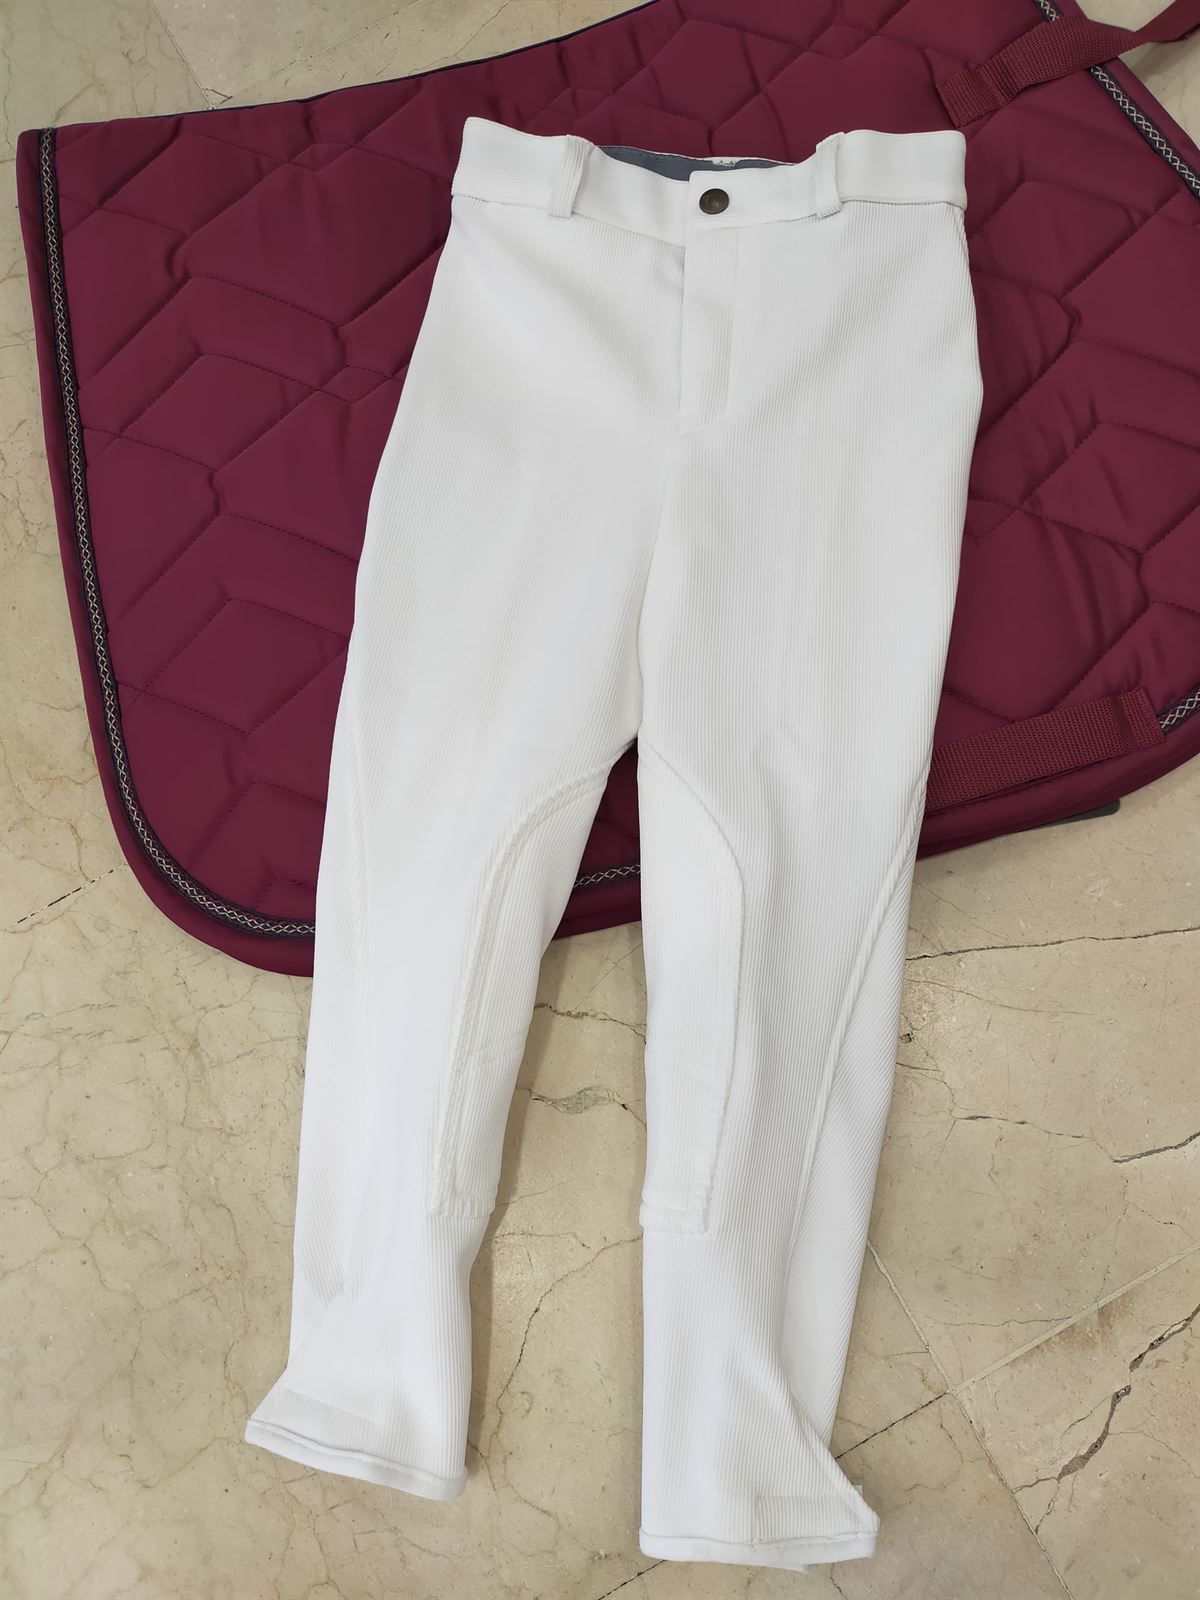 Pantalón unisex TUFF RIDER Country color blanco TALLA 10 (tallaje infantil) - Imagen 2